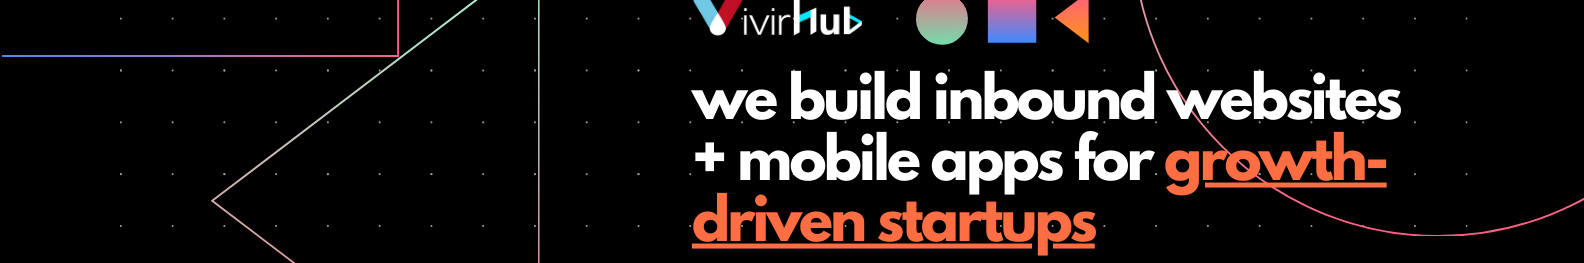 Vivir hub's profile banner